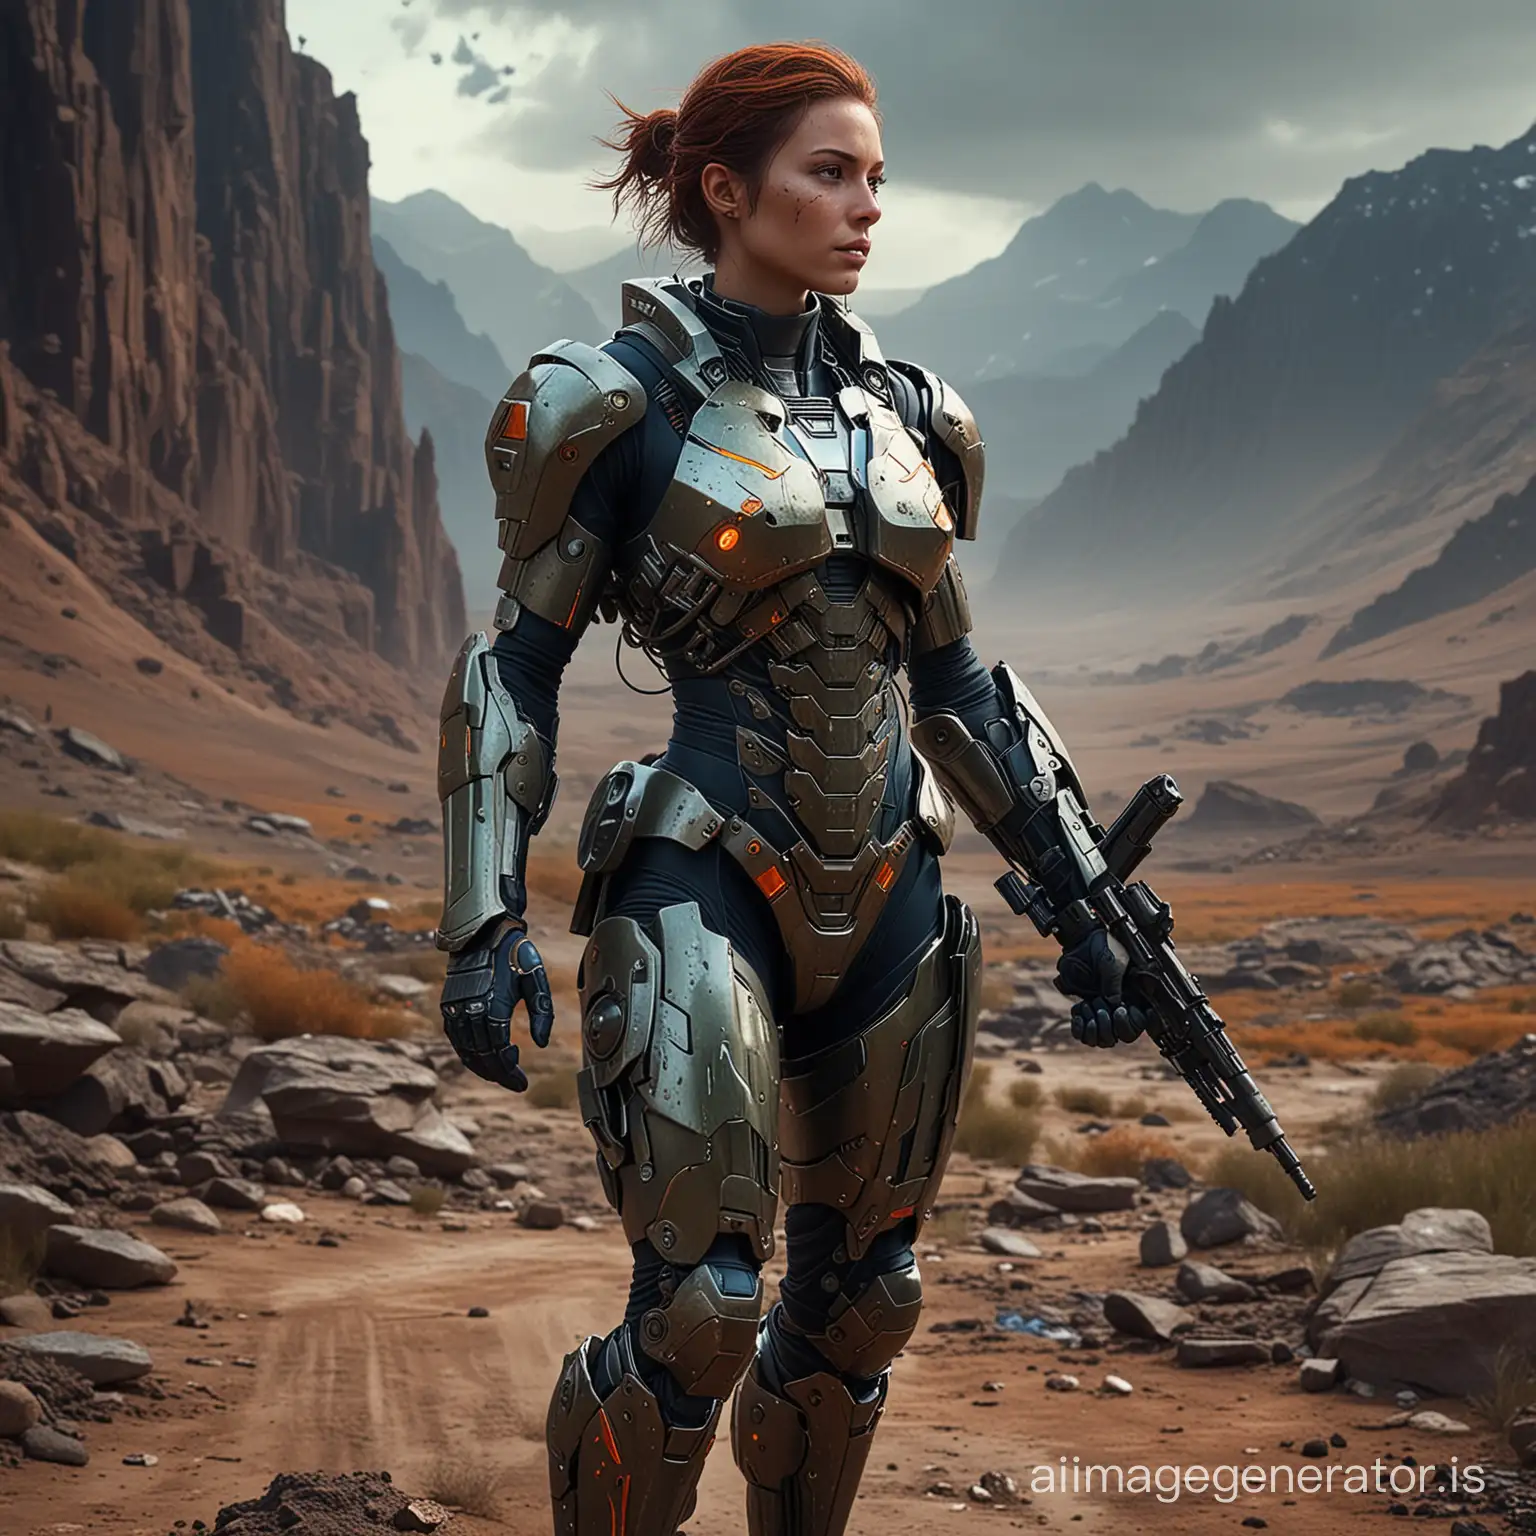 Futuristic-Cyborg-Soldier-Navigating-Dystopian-Wasteland-in-Hyperrealistic-SciFi-Surrealist-Art